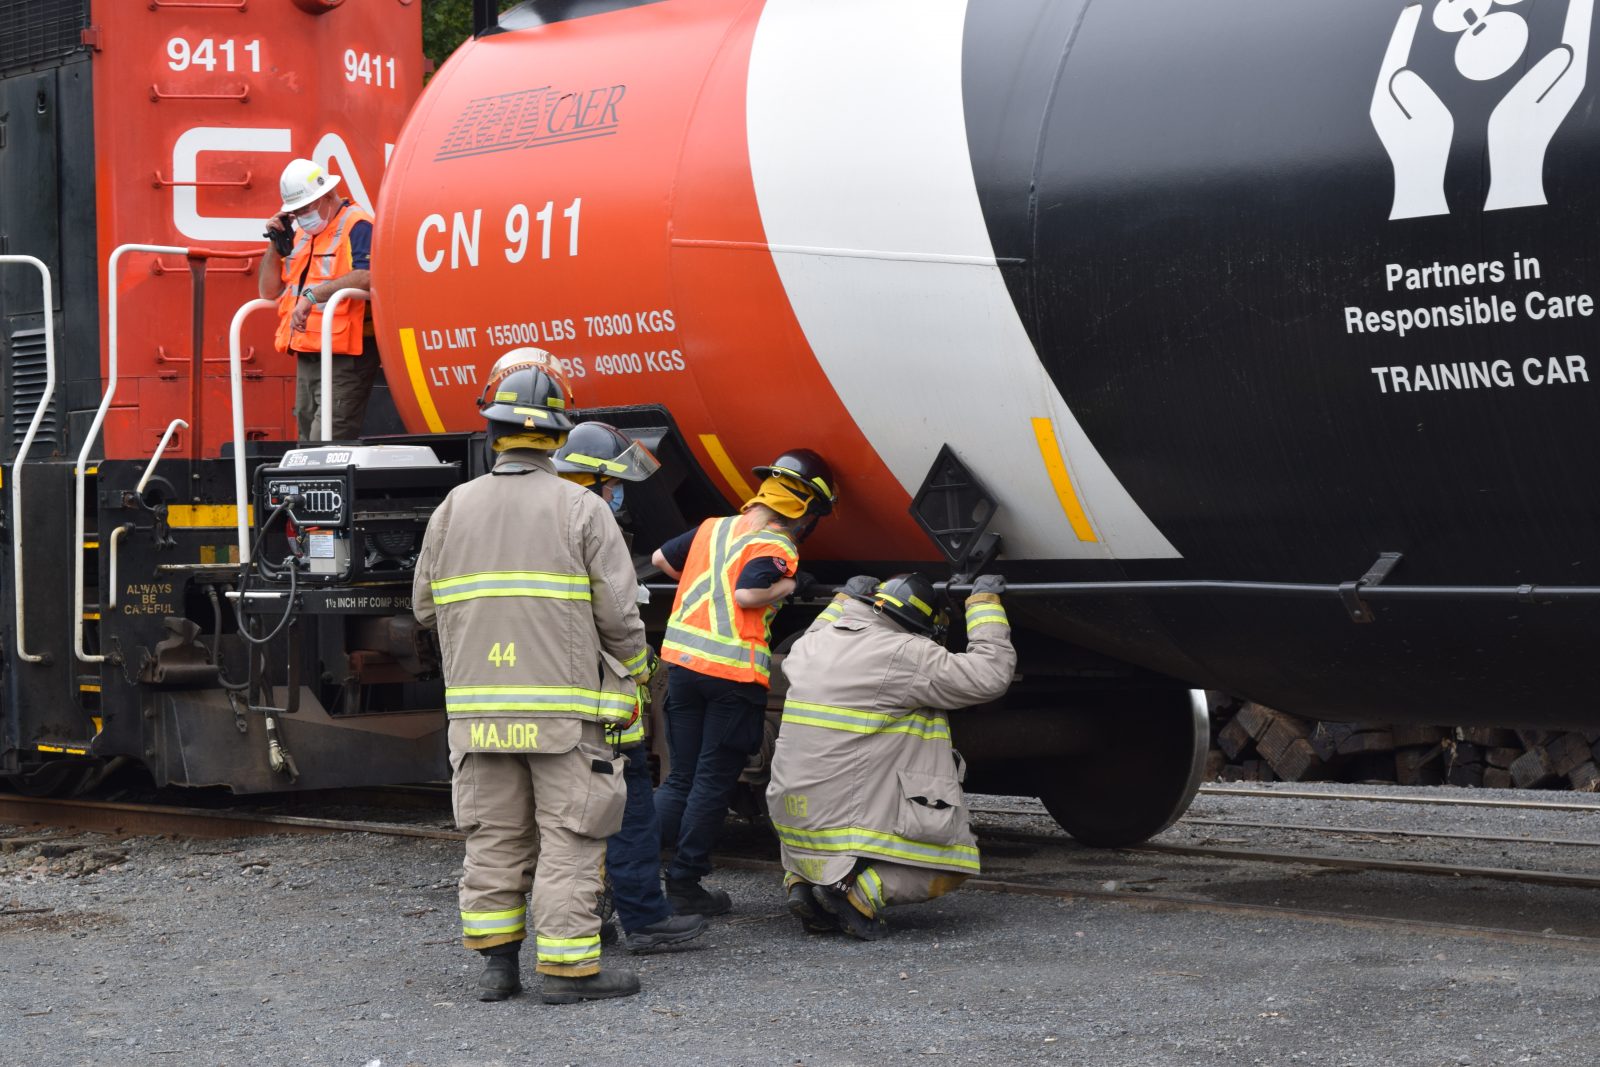 Cornwall emergency responders take part in train derailment exercise